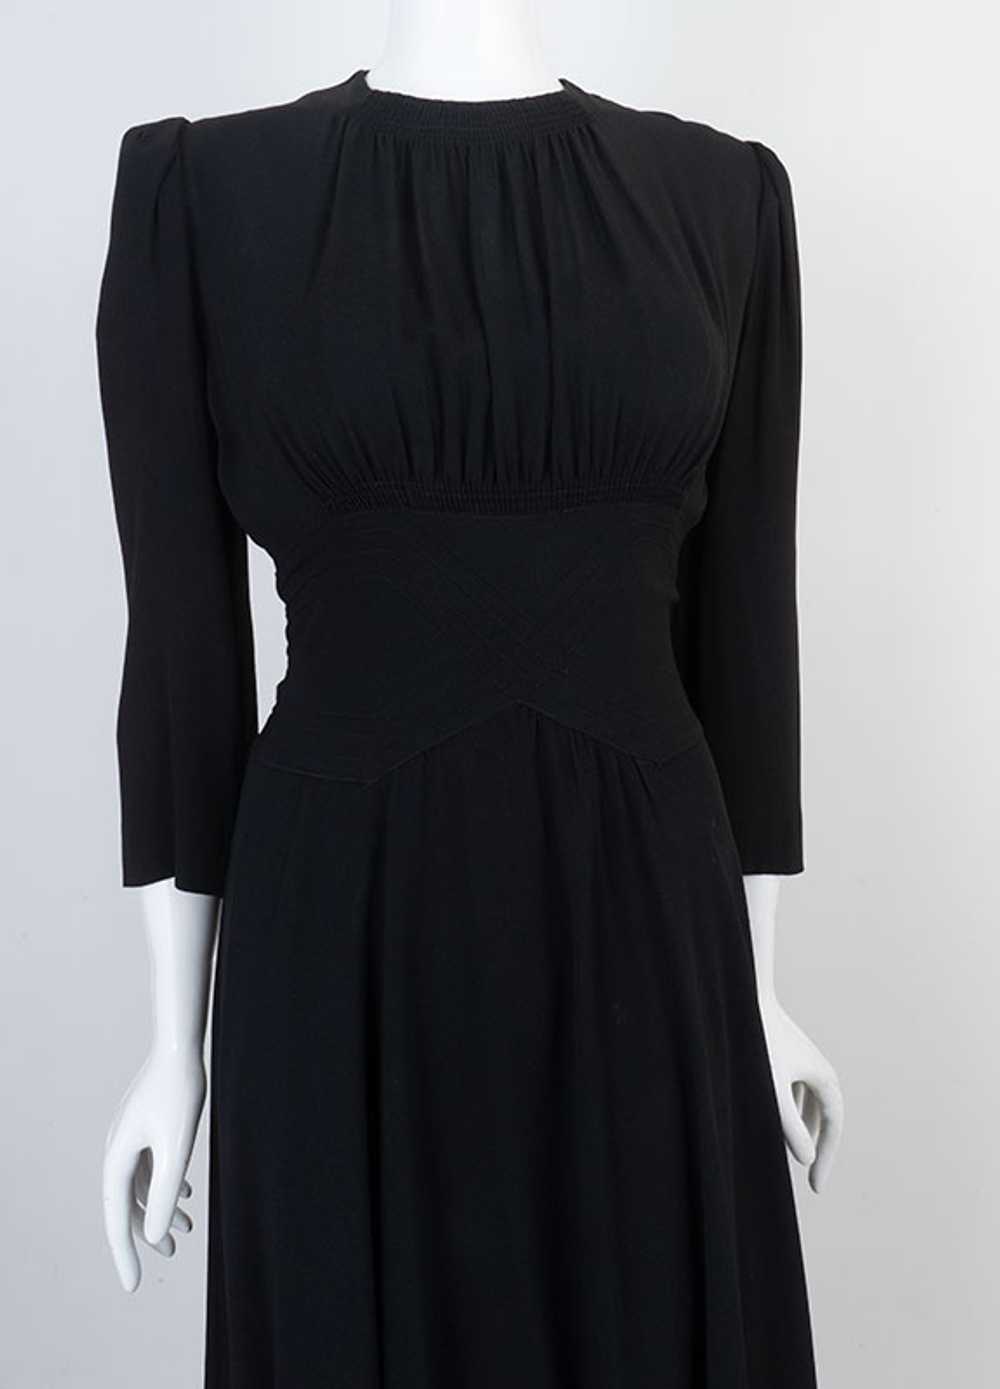 Stunning 1940s Crepe Rayon Evening Dress - image 6